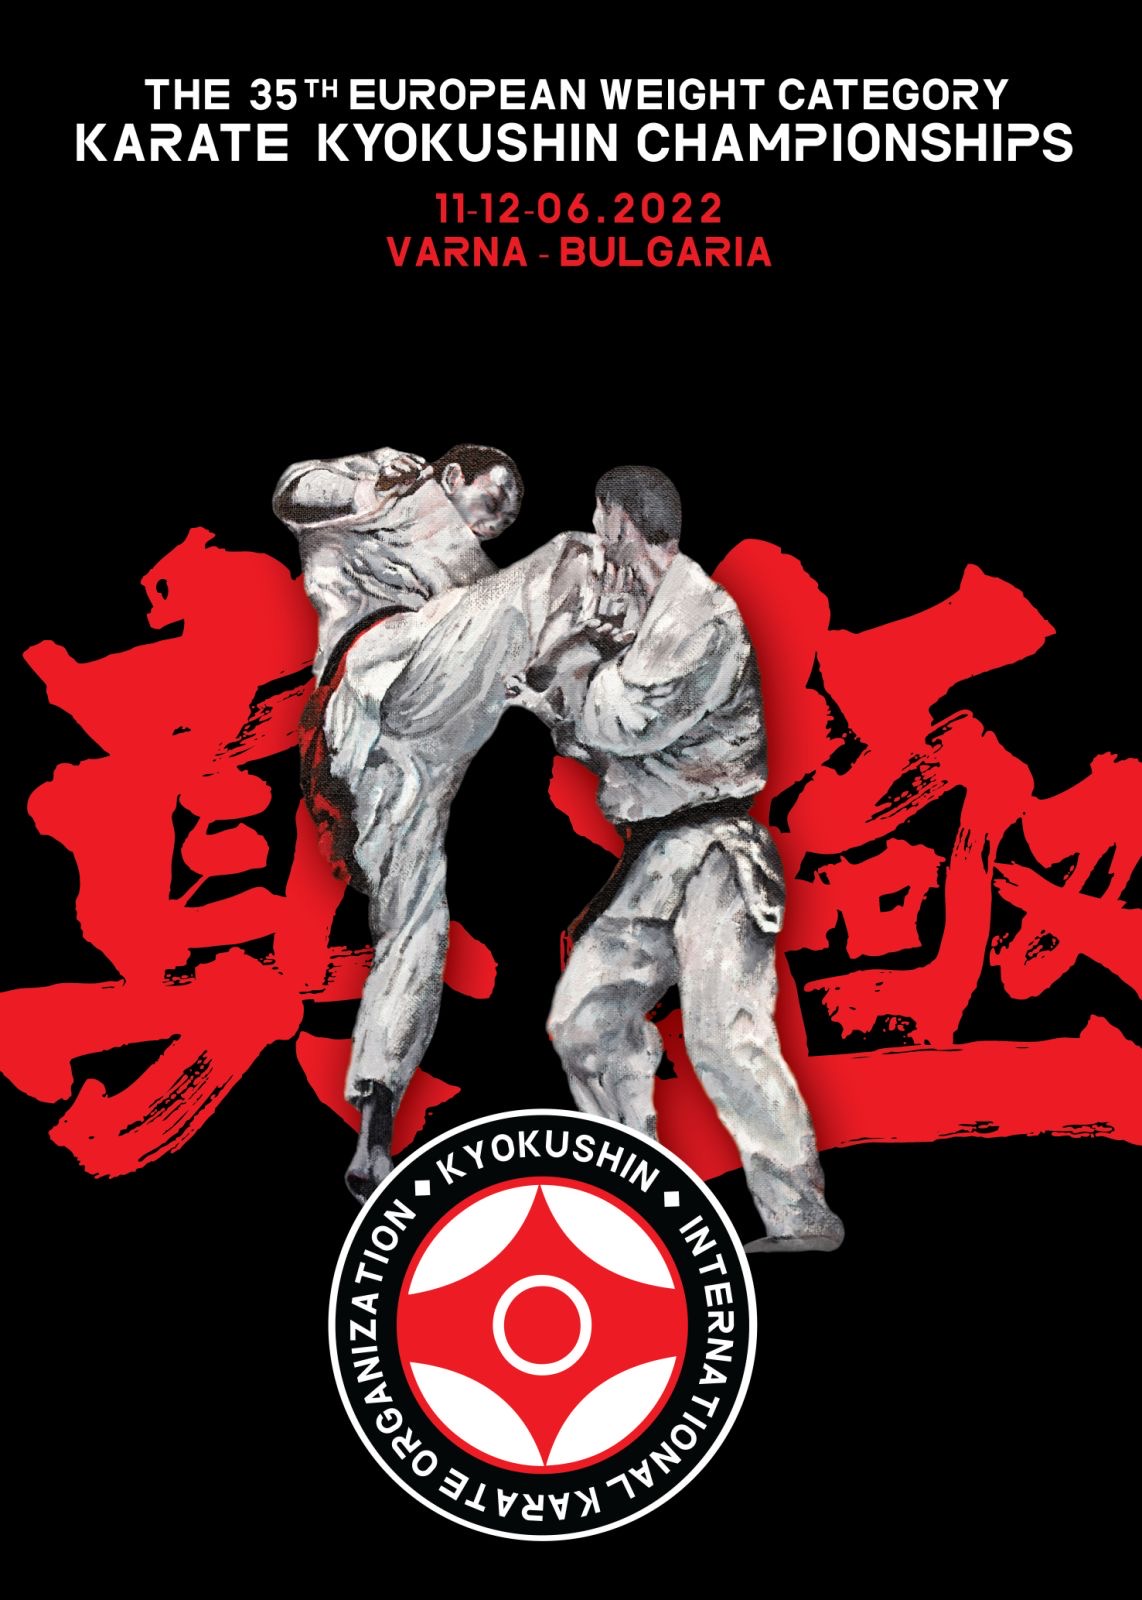 The 35th European Weight Category Karate Kyokushin Championships